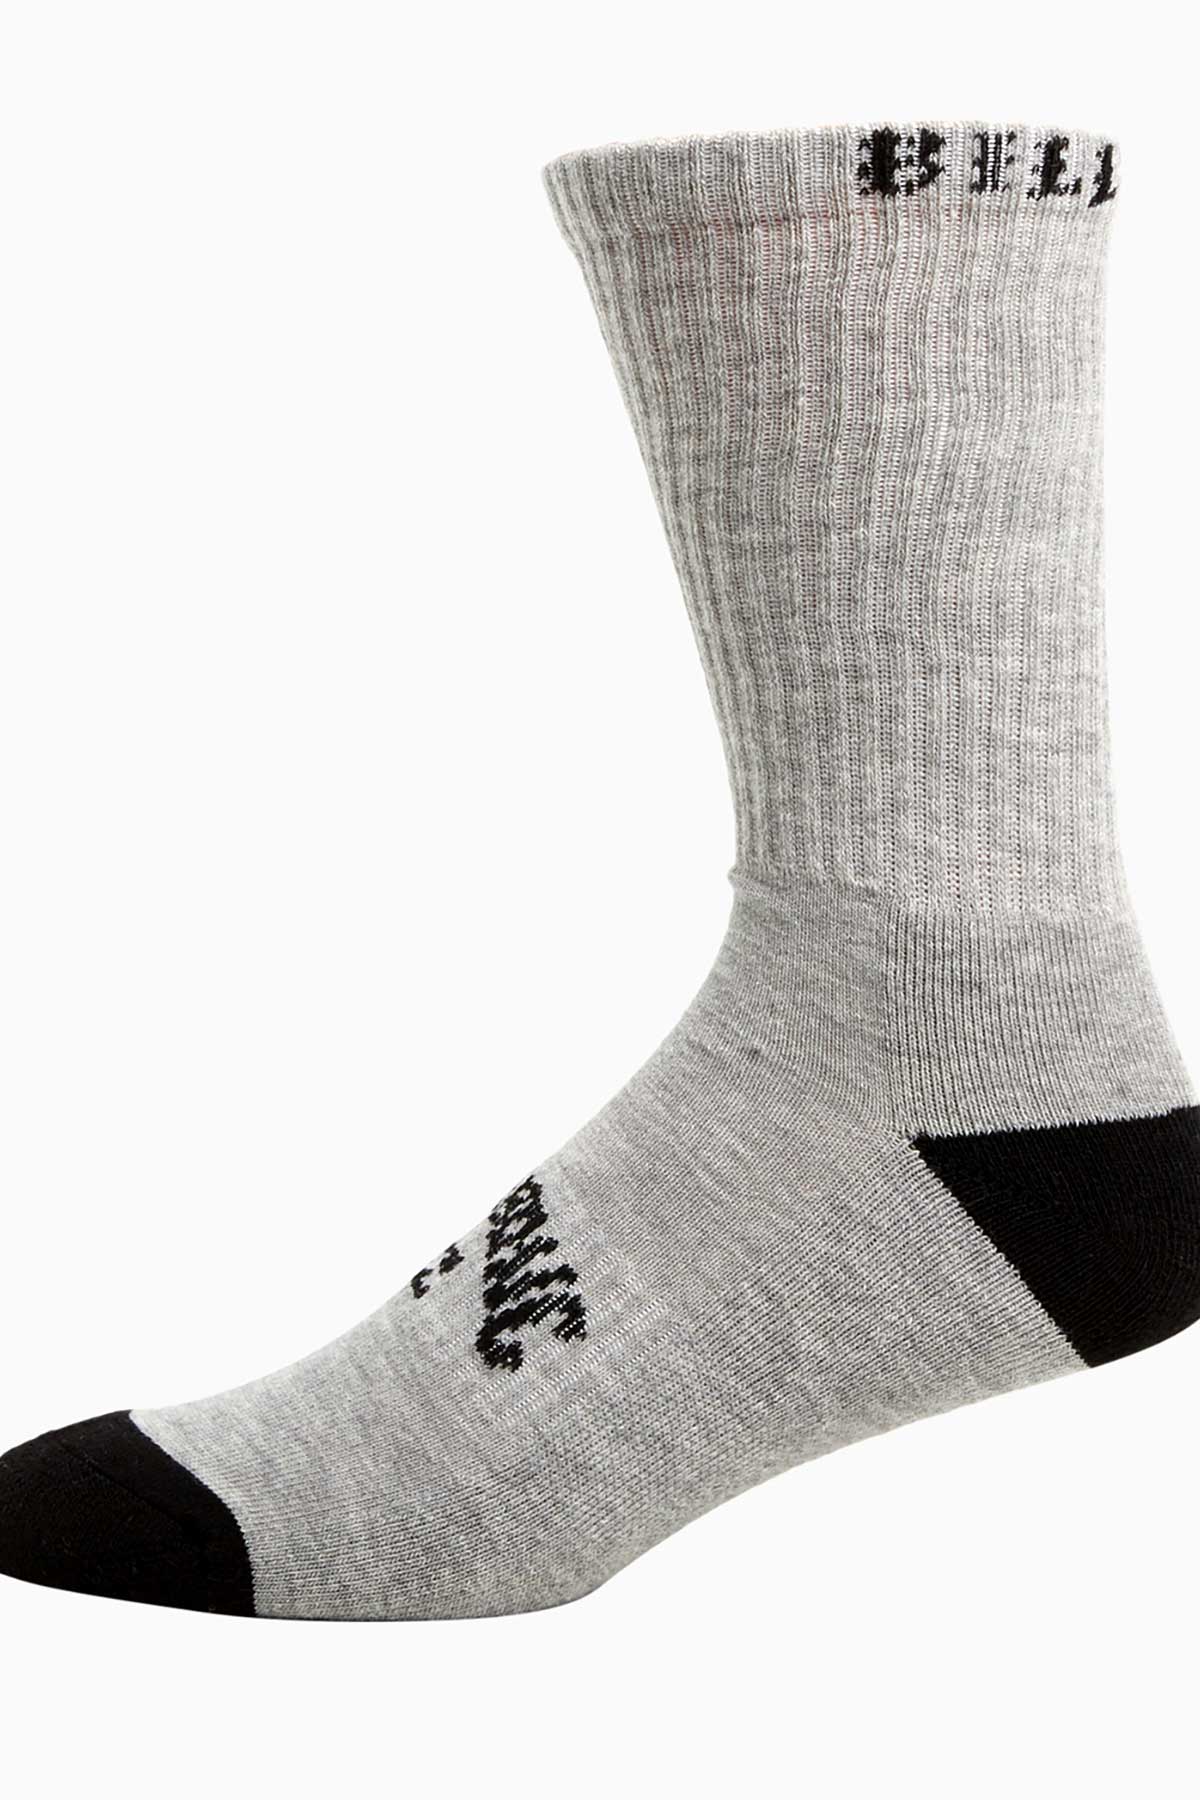 Billabong Sport Socks - 5 Pack Multi, Grey.